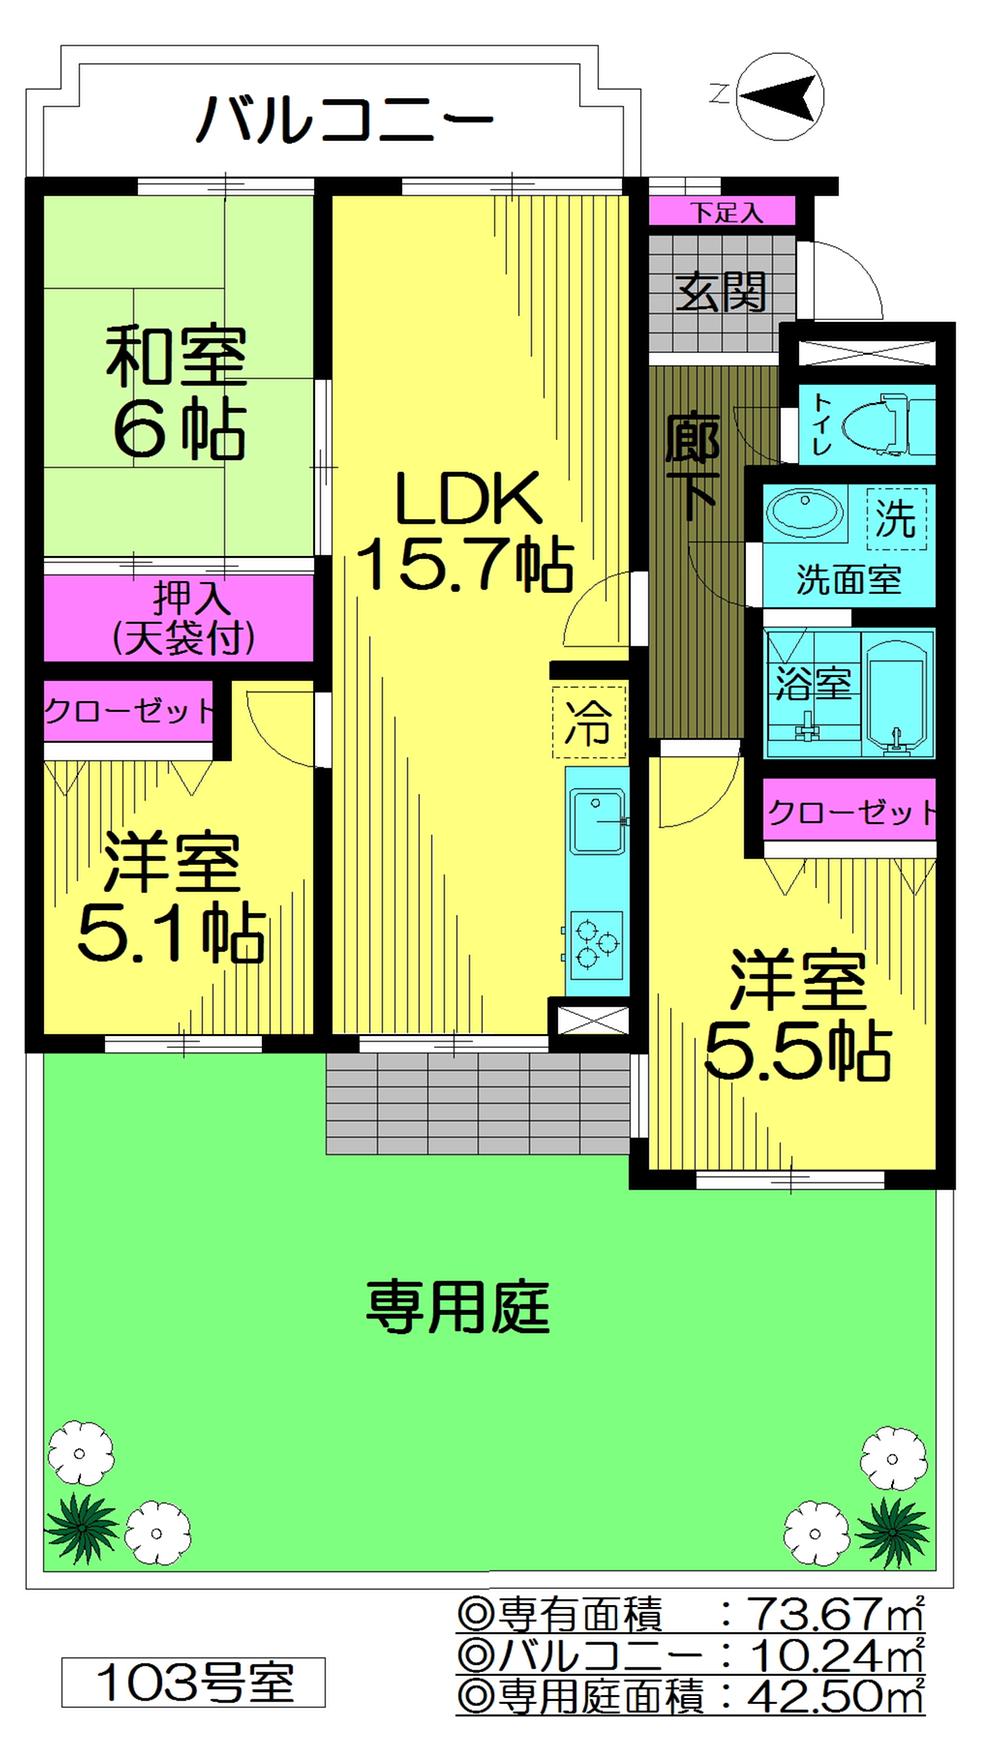 Floor plan. 3LDK, Price 15.4 million yen, Occupied area 73.67 sq m , Balcony area 10.24 sq m interior full renovated 3LDK